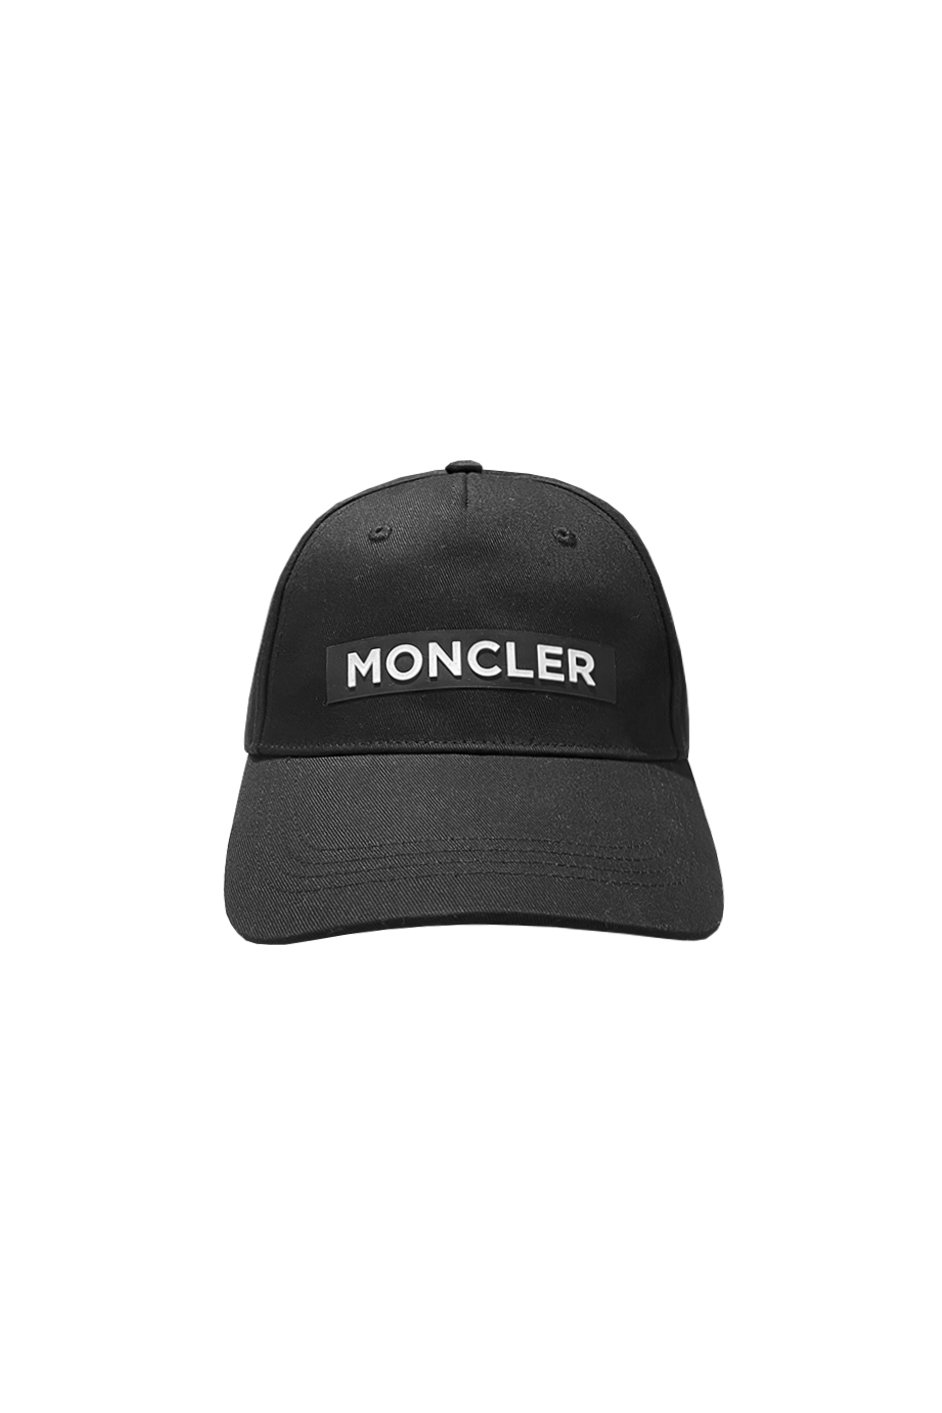 Moncler - elephants online store